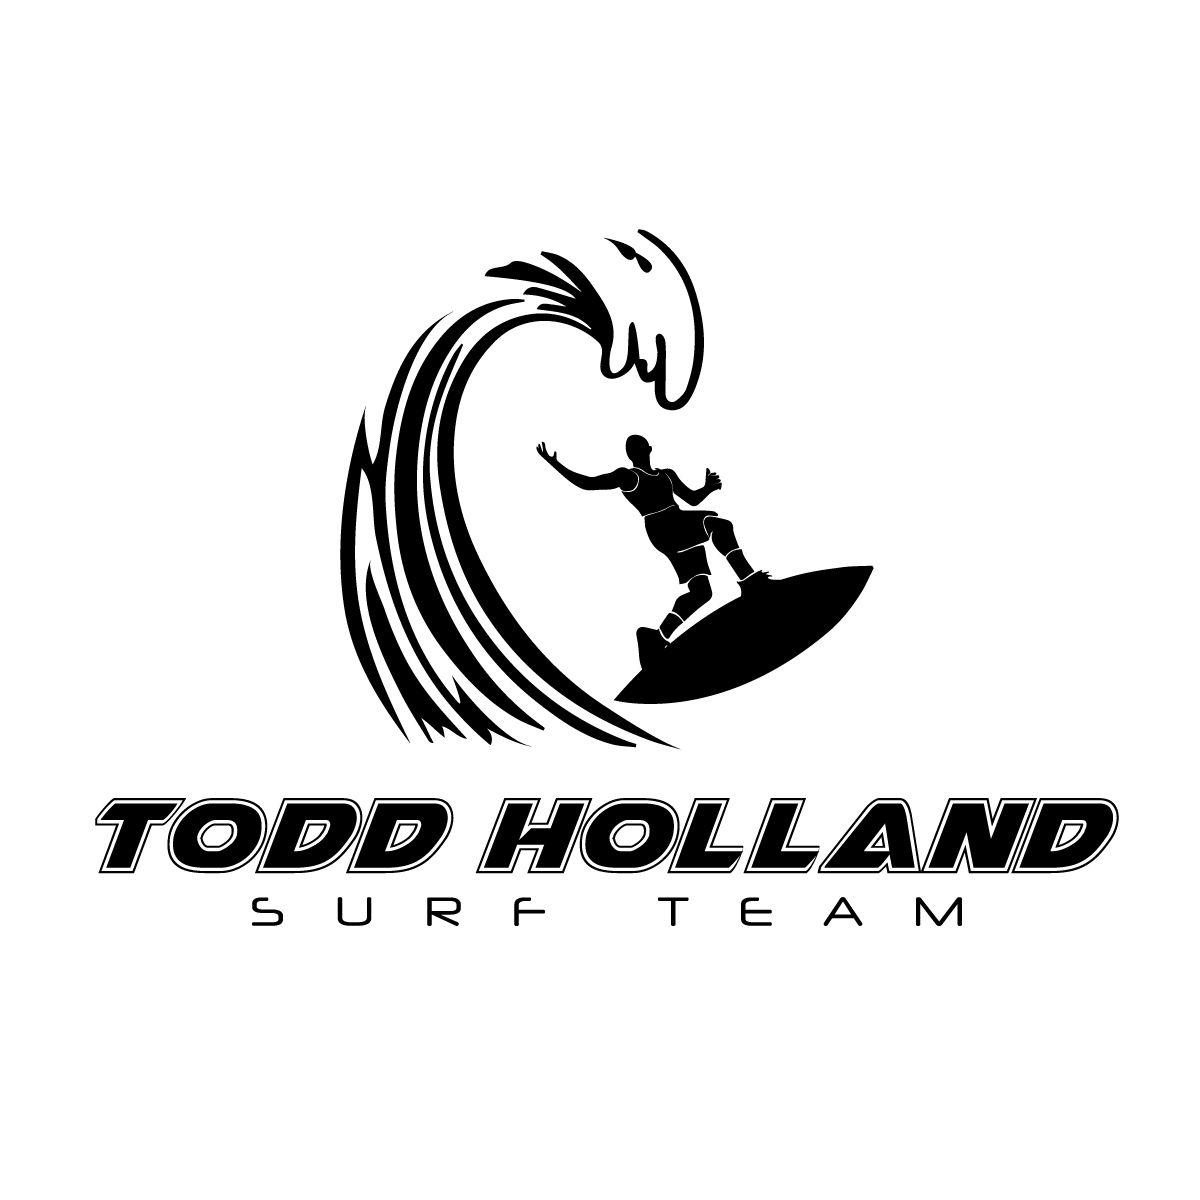 Surf Team Logo - School Logo Design for Todd Holland Surf Team by logo's By cristifer ...